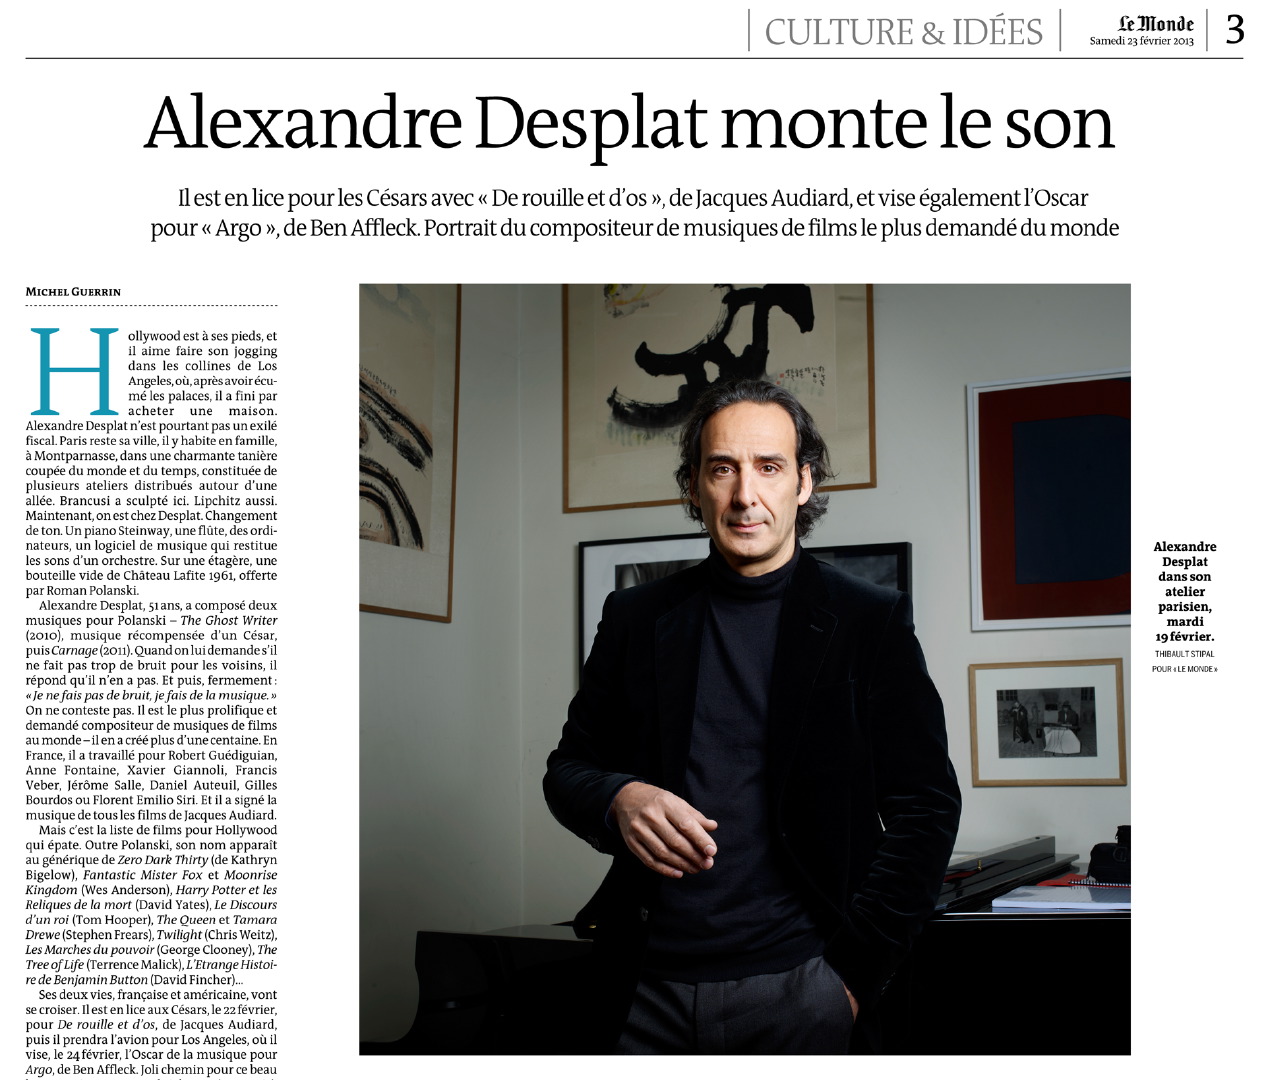 Thibault Stipal - Photographer - Alexandre Desplat / Le Monde - 1